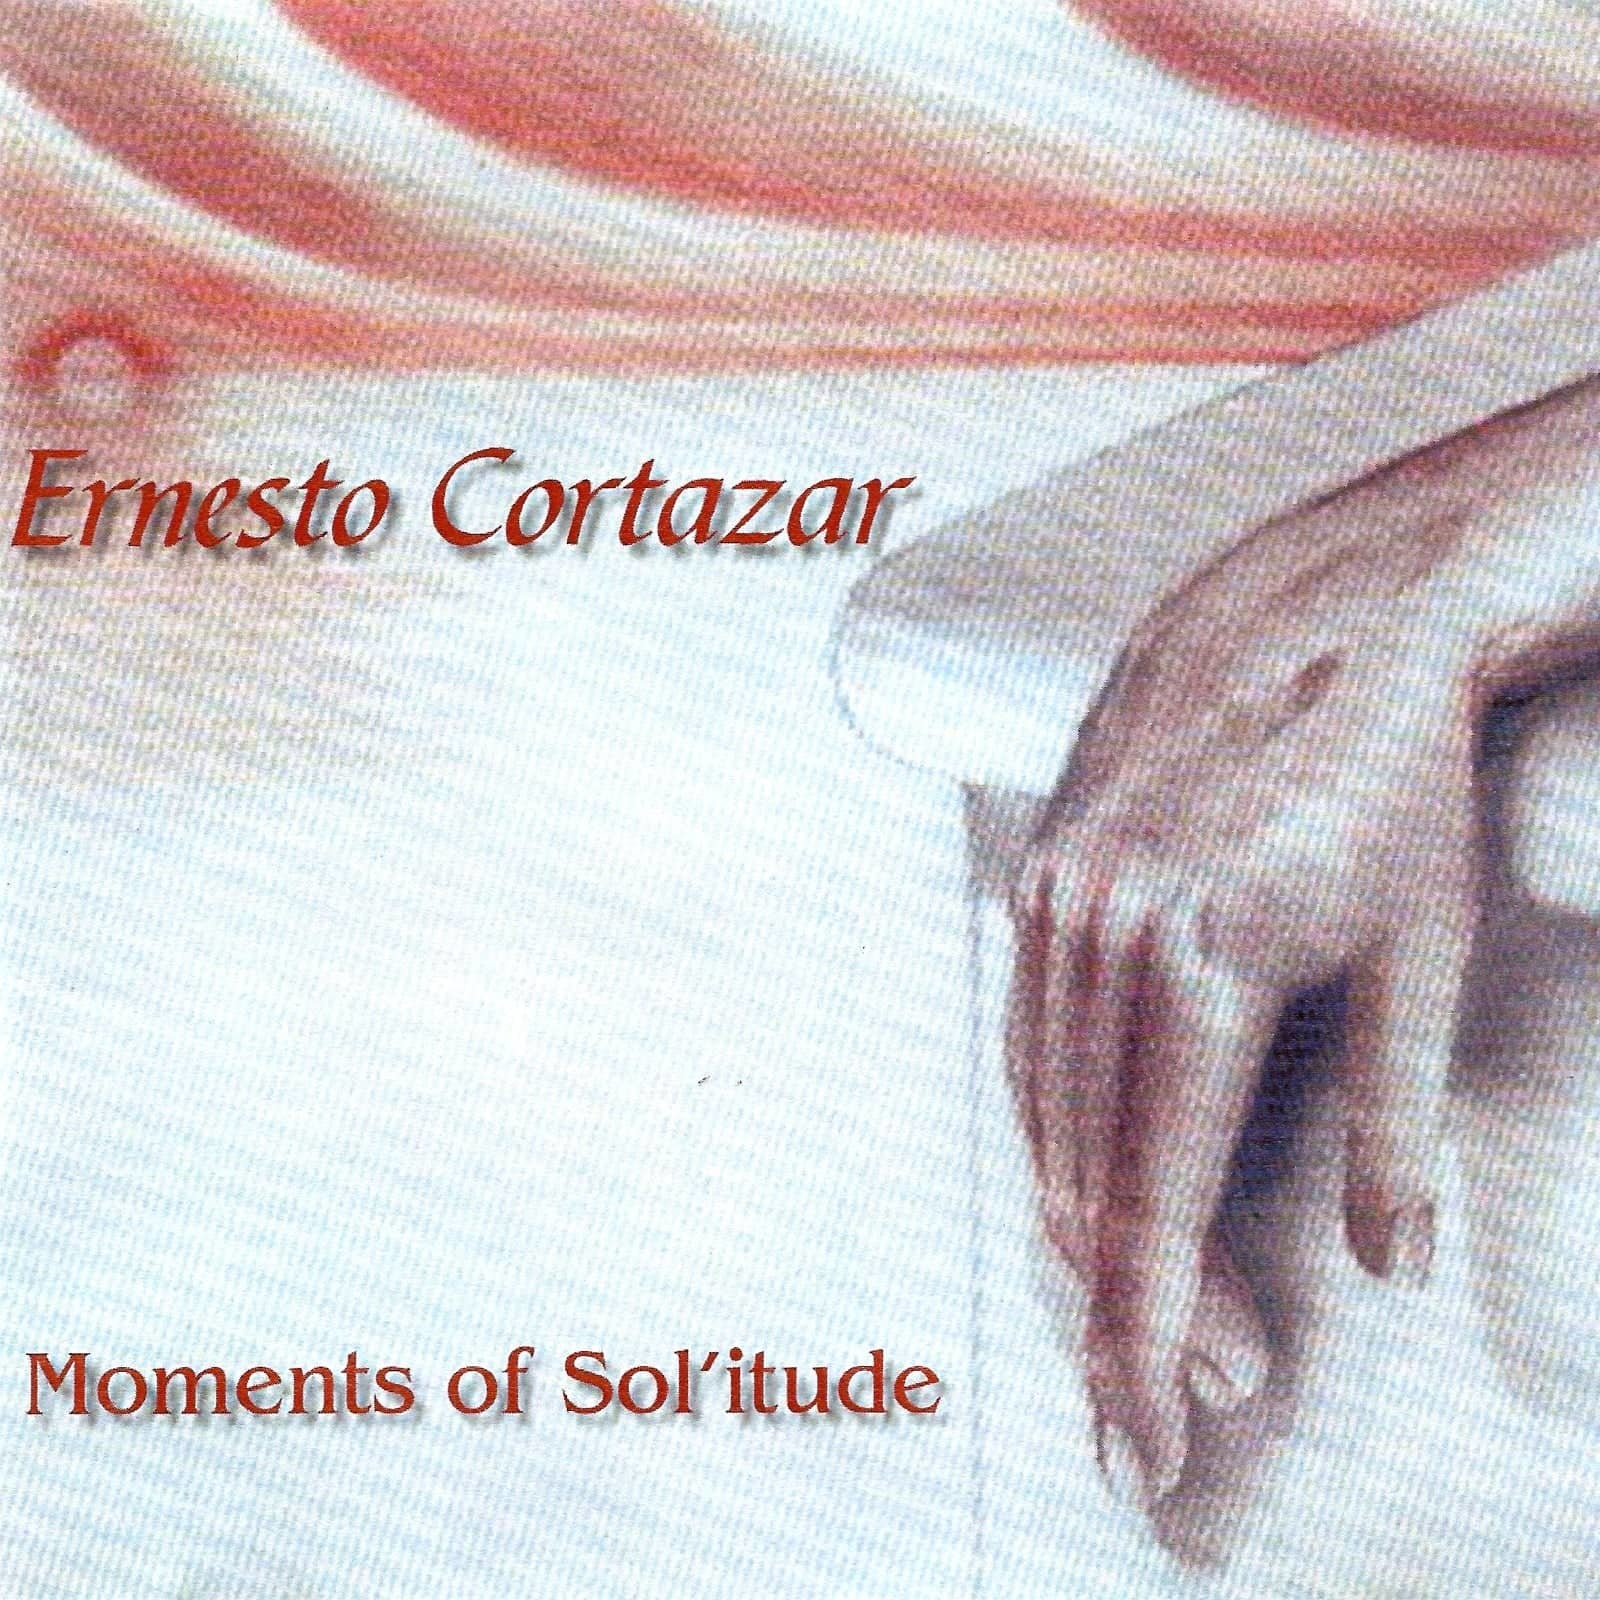 Moments Of Sol'itude MP3 Album Composed by Ernesto Cortazar